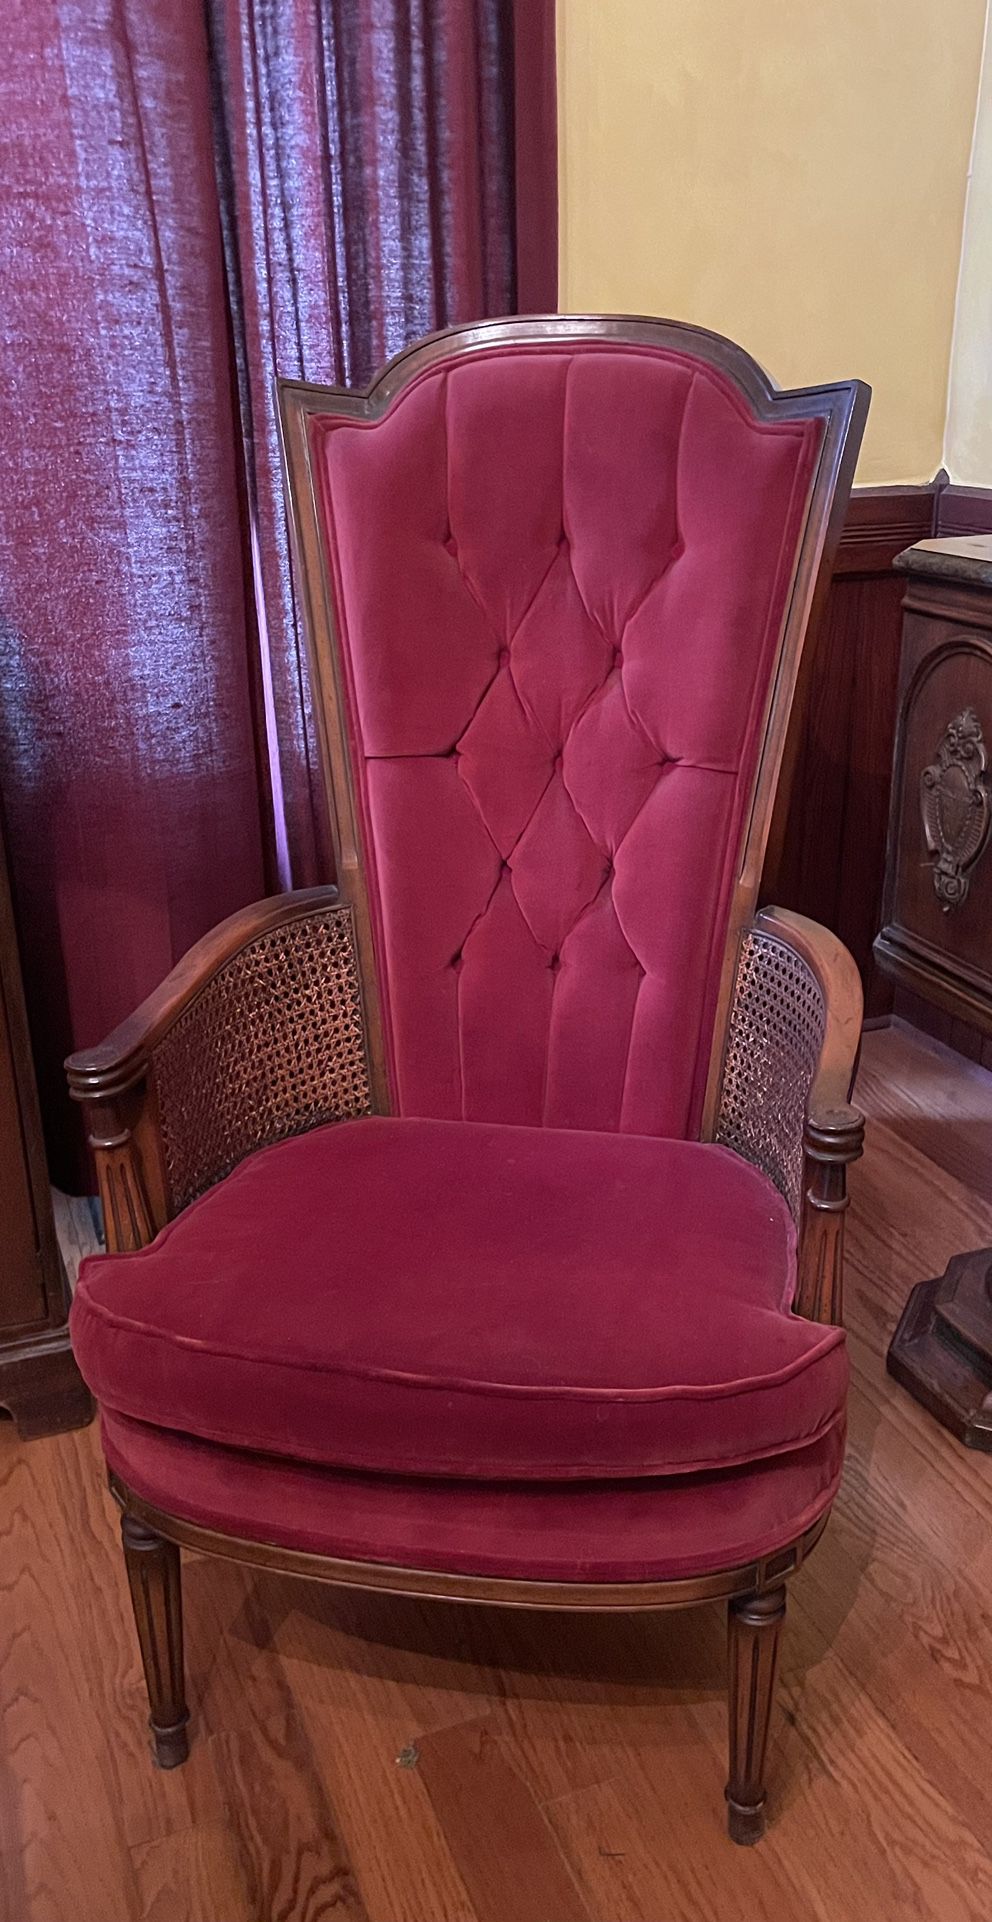 Antique high back chair